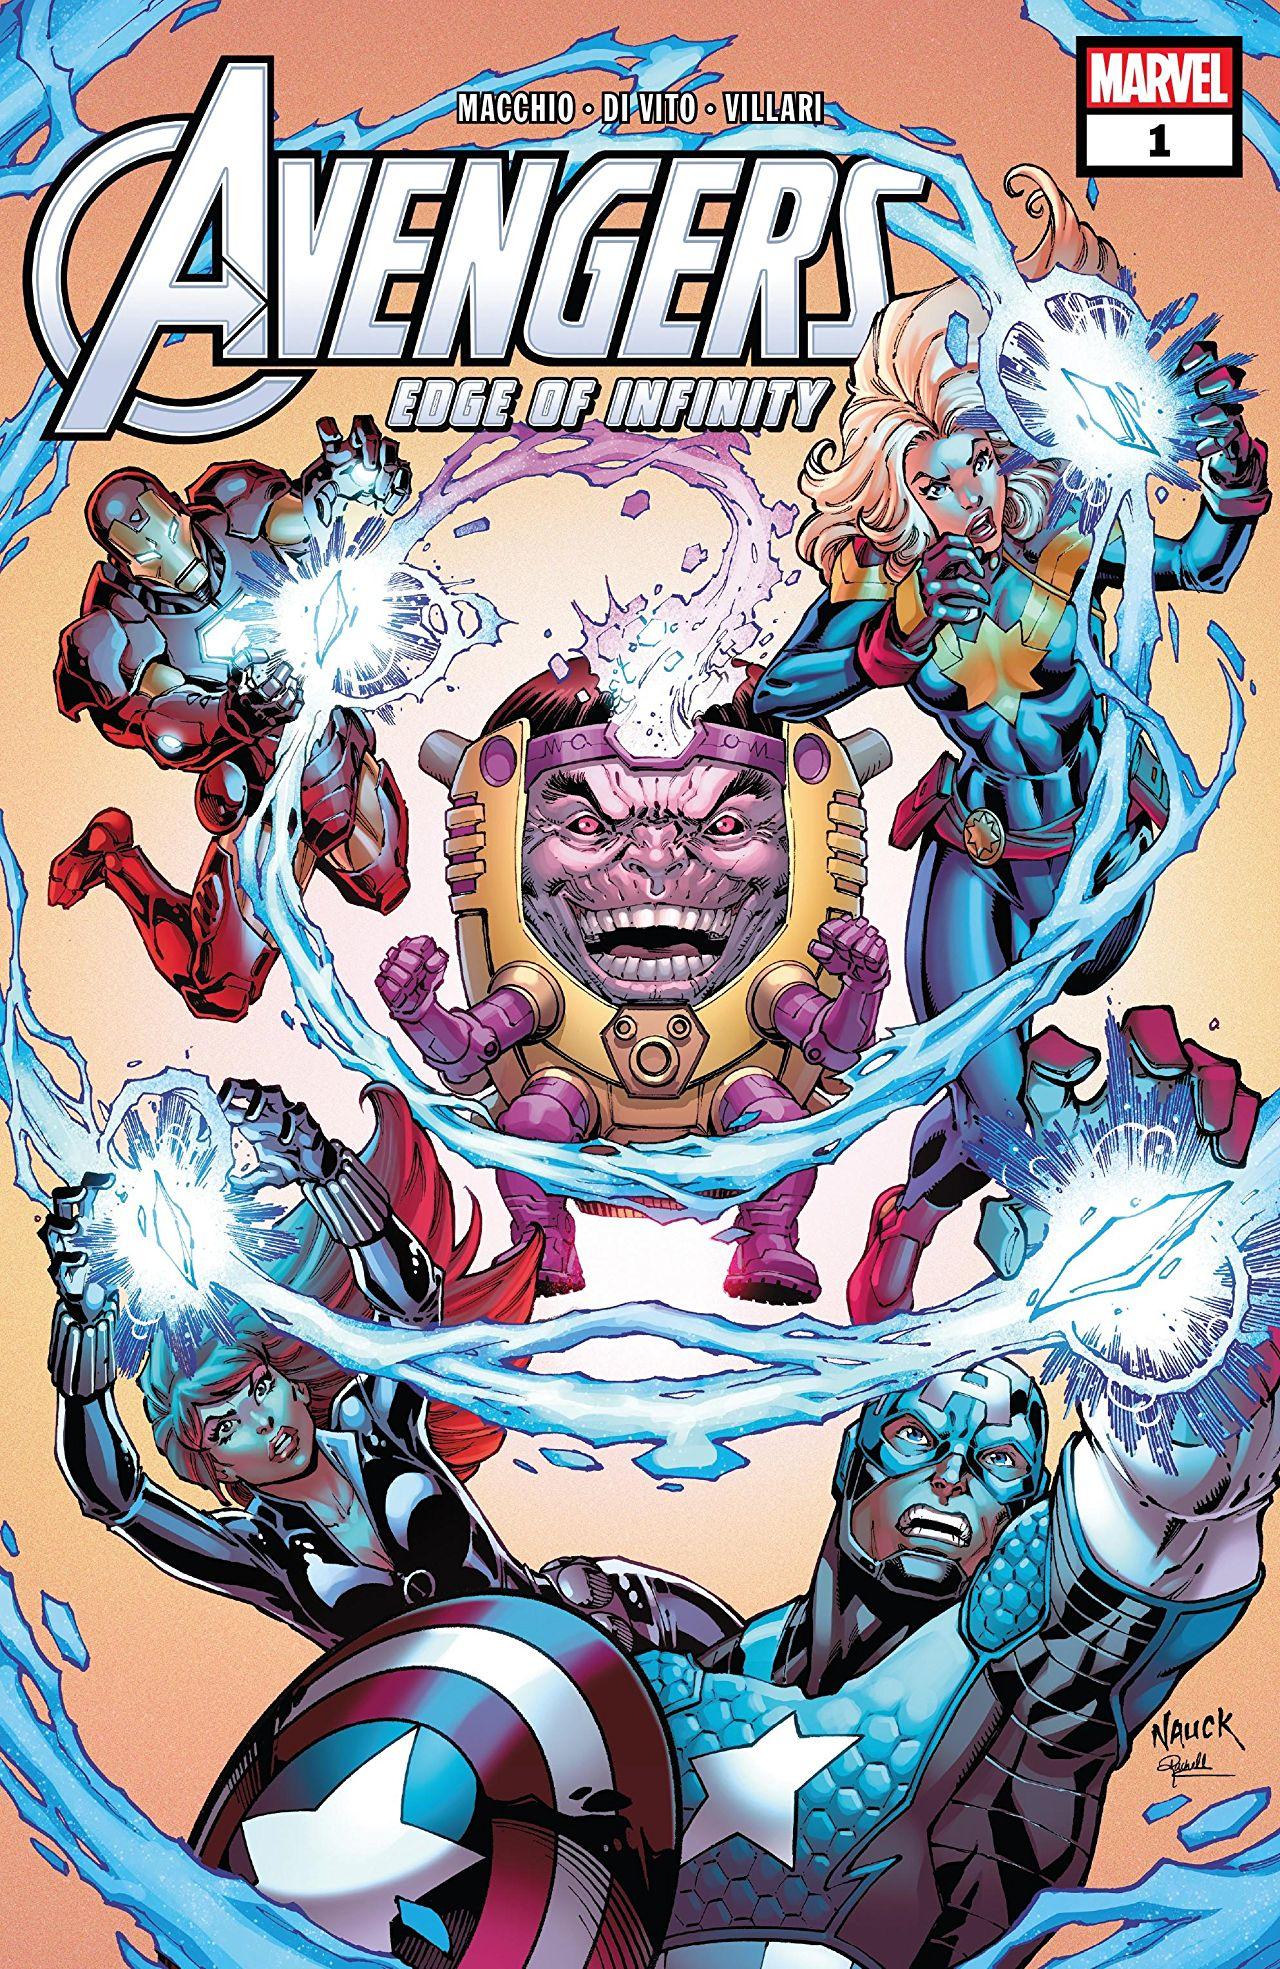 Avengers: Edge of Infinity Vol. 1 #1